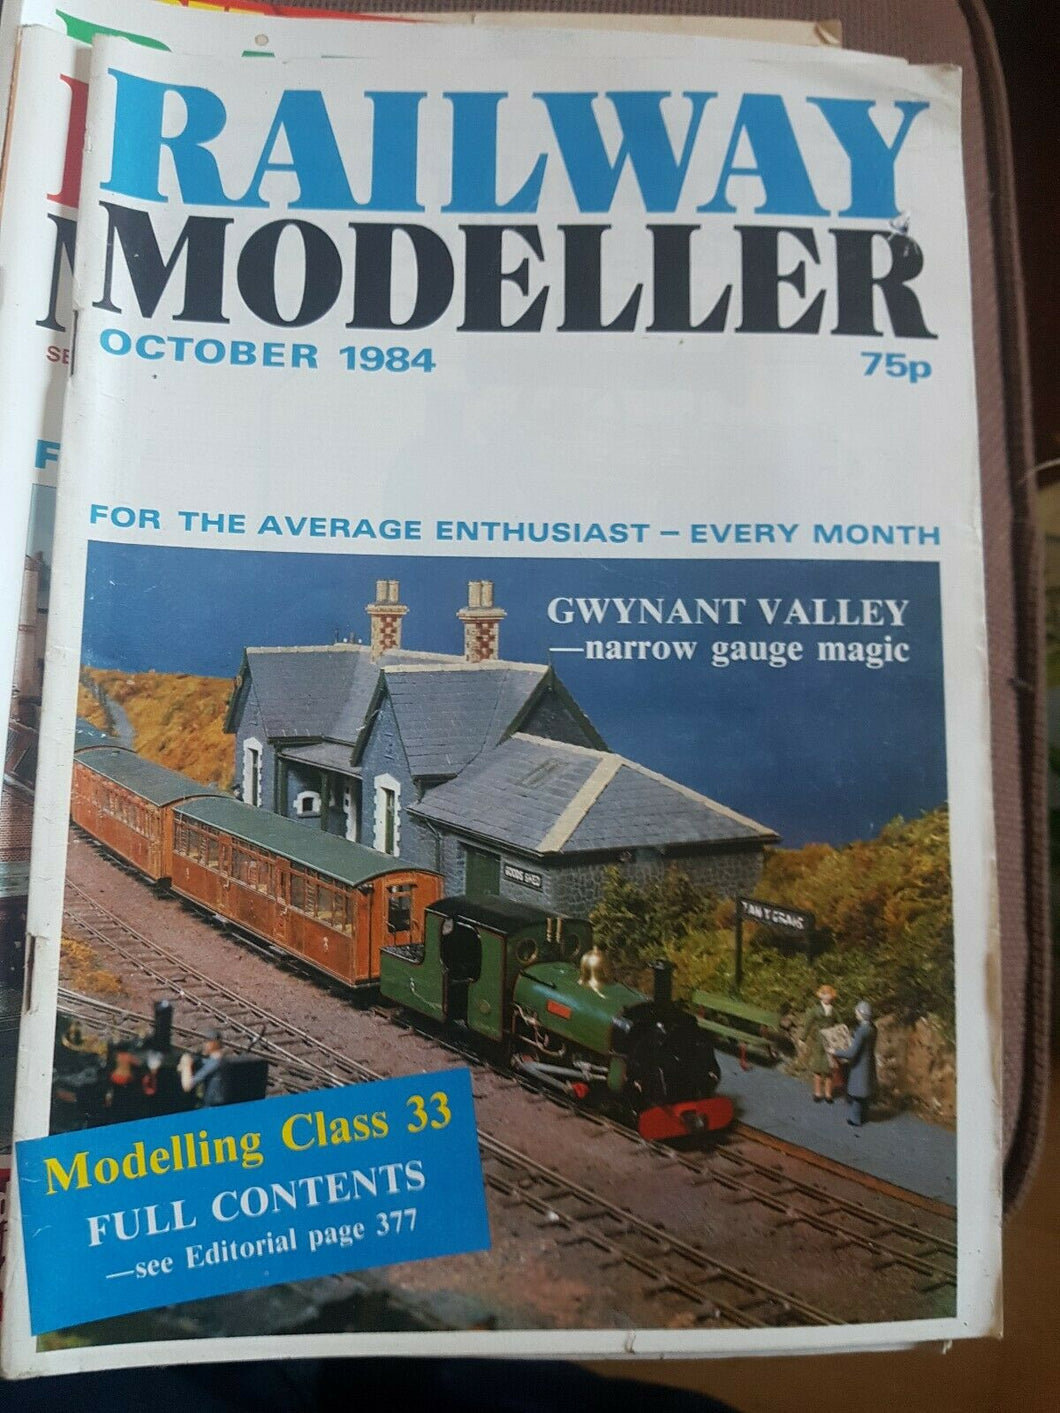 Railway modeller magazine October 1984